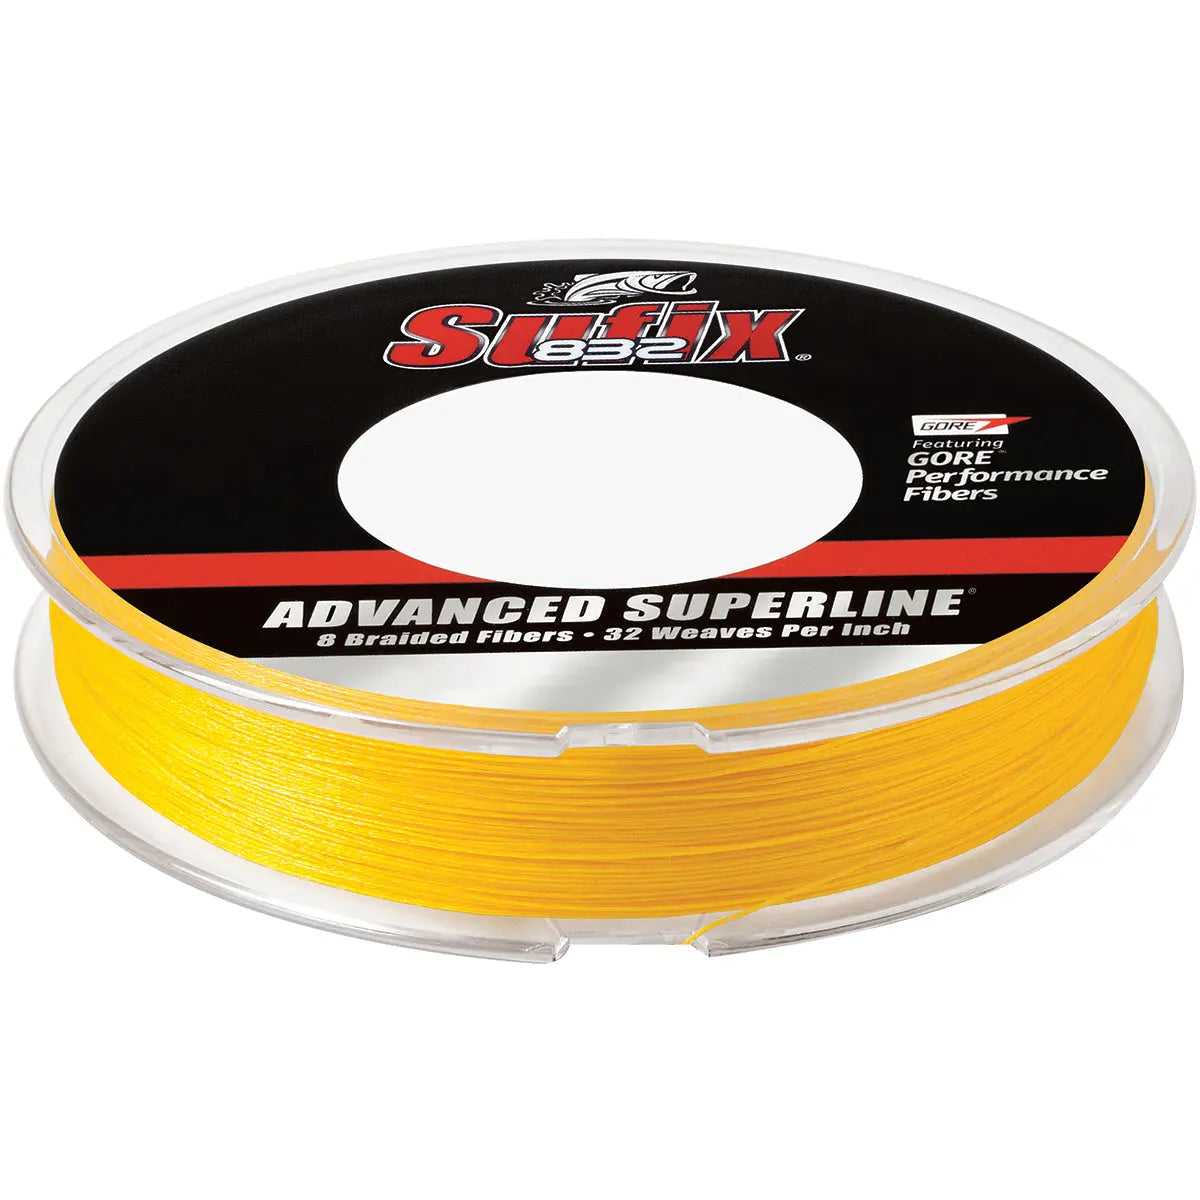 Sufix 150 Yard 832 Advanced Superline Braid Fishing Line - 20 lb. - Hi-Vis Yellow Sufix